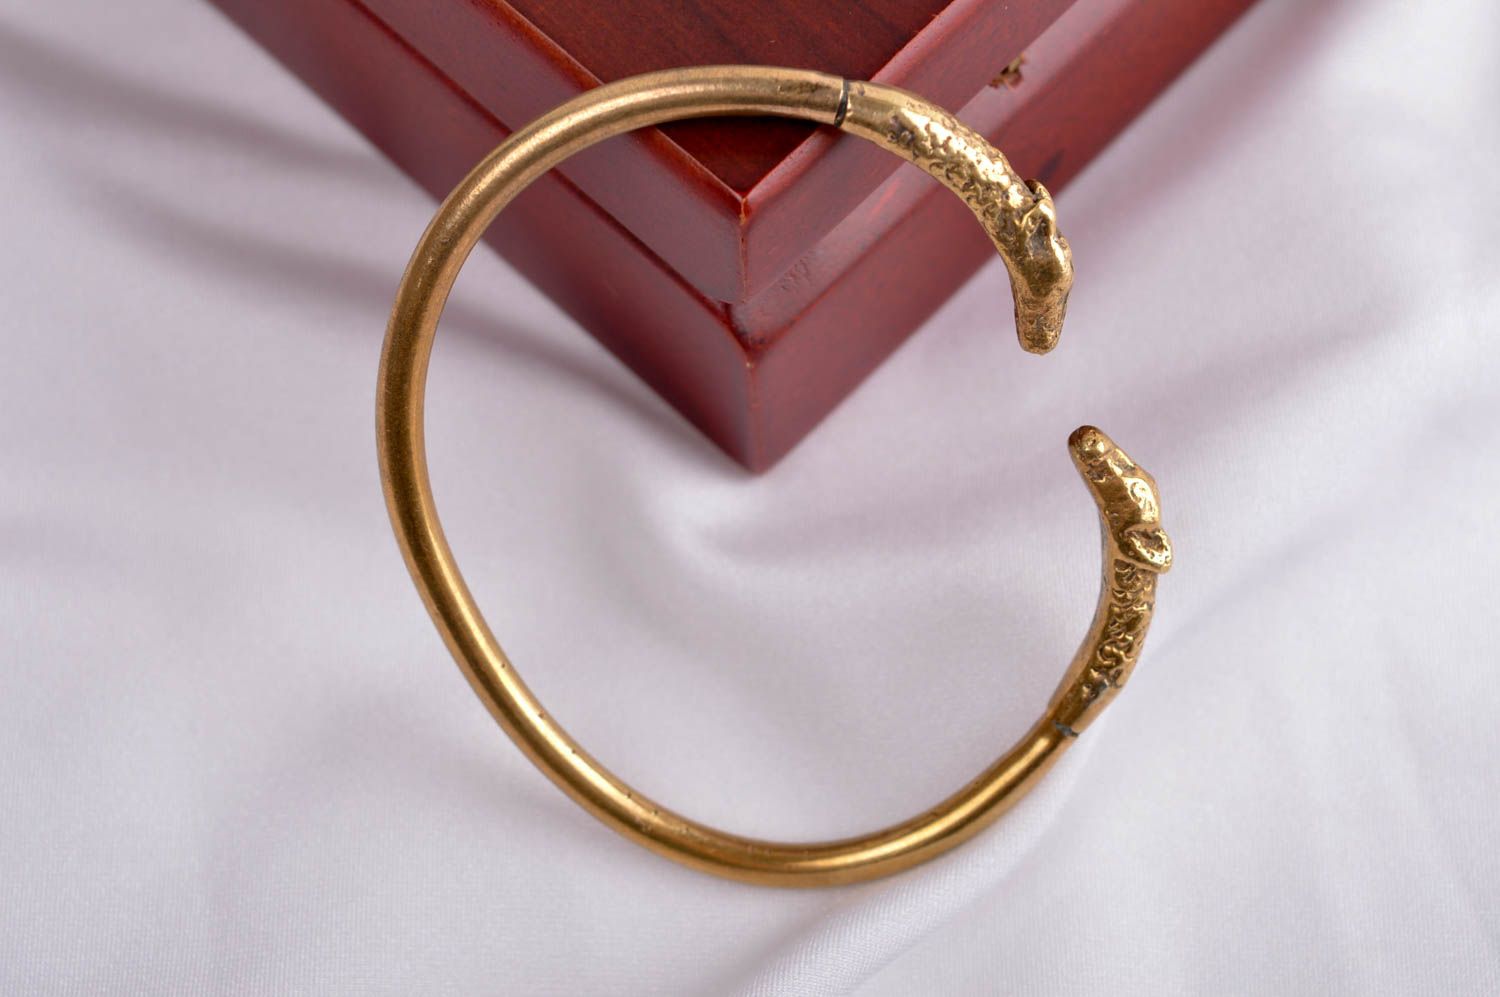 Beautiful handmade wrist bracelet designs metal jewelry best gifts for her photo 1